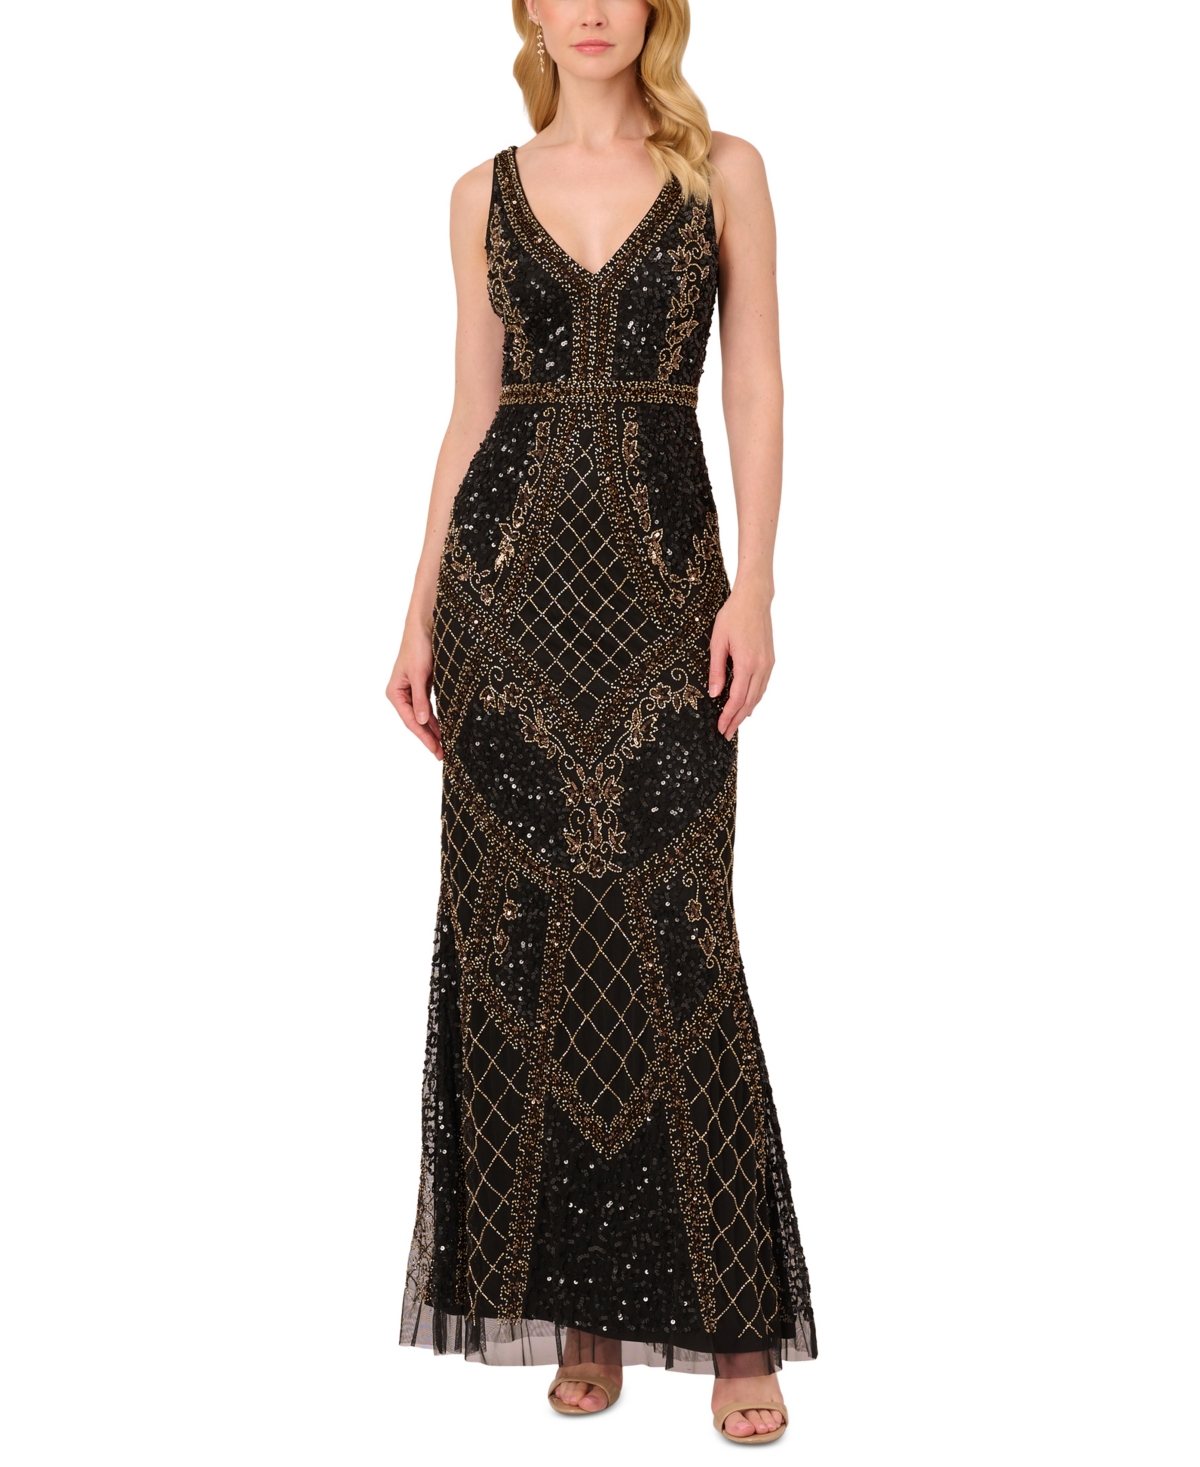 Buy Boardwalk Empire Inspired Dresses Adrianna Papell Womens Beaded Mesh Column Gown - Black Gold $349.00 AT vintagedancer.com